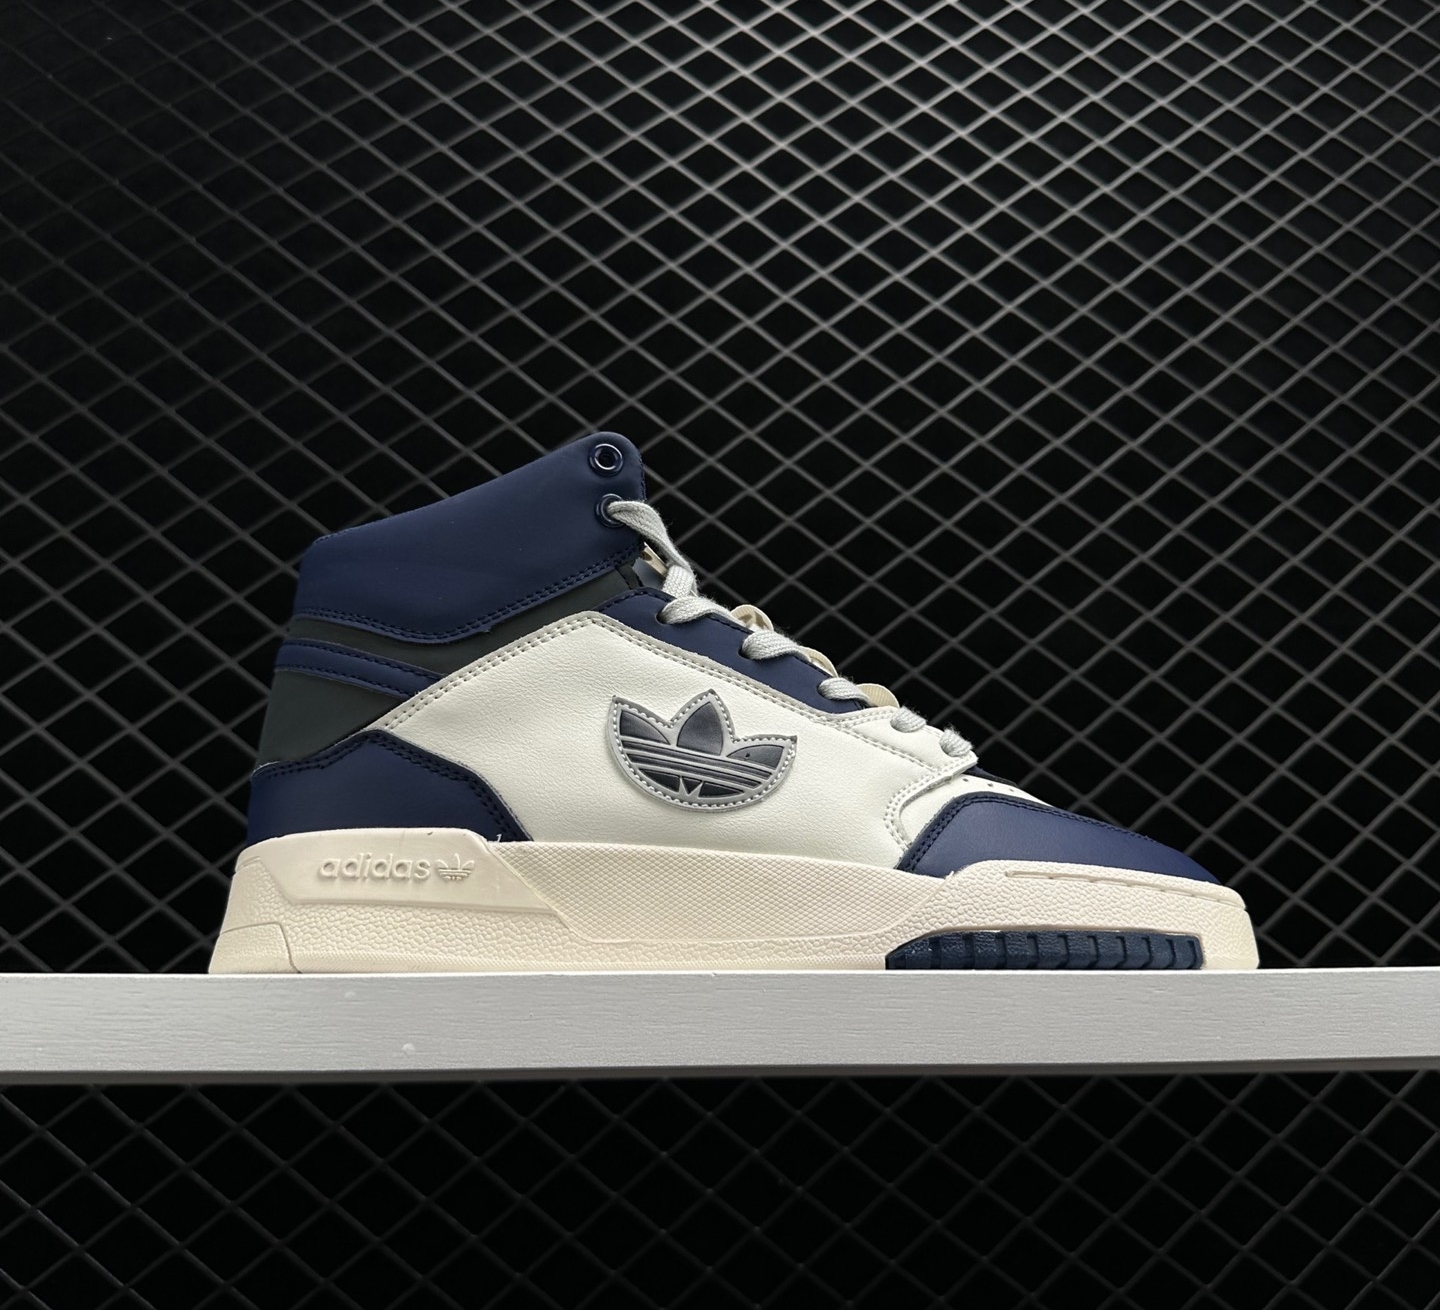 Adidas Originals Drop Step XL - White Navy Sneakers HQ6946